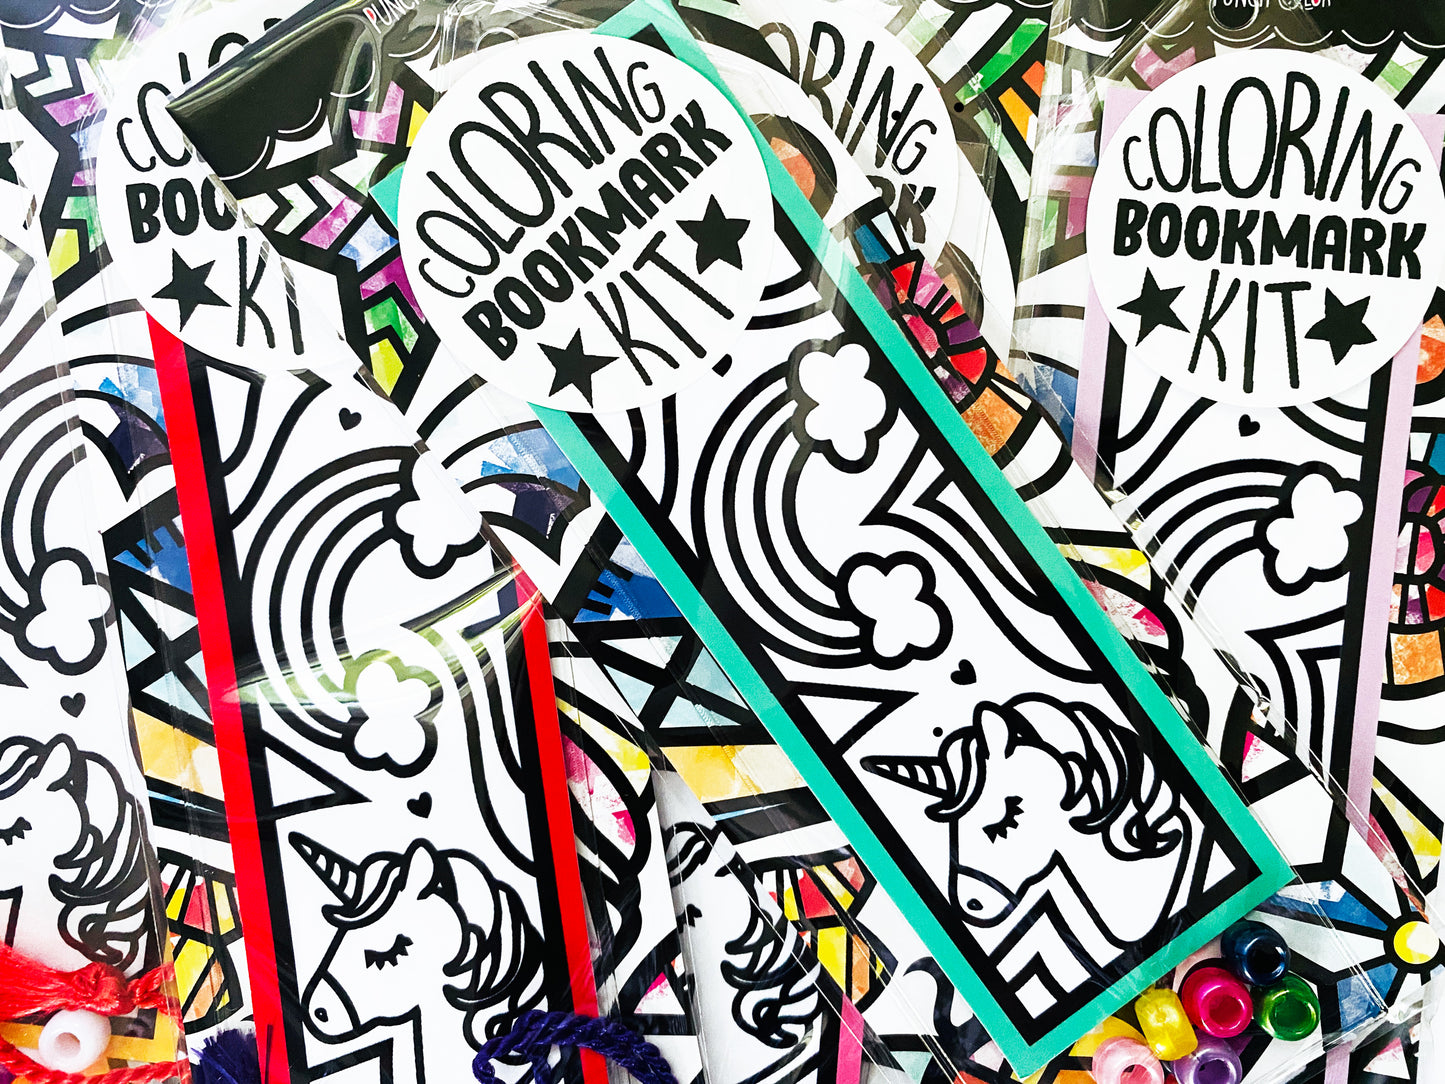 Unicorn Coloring Bookmark Kit